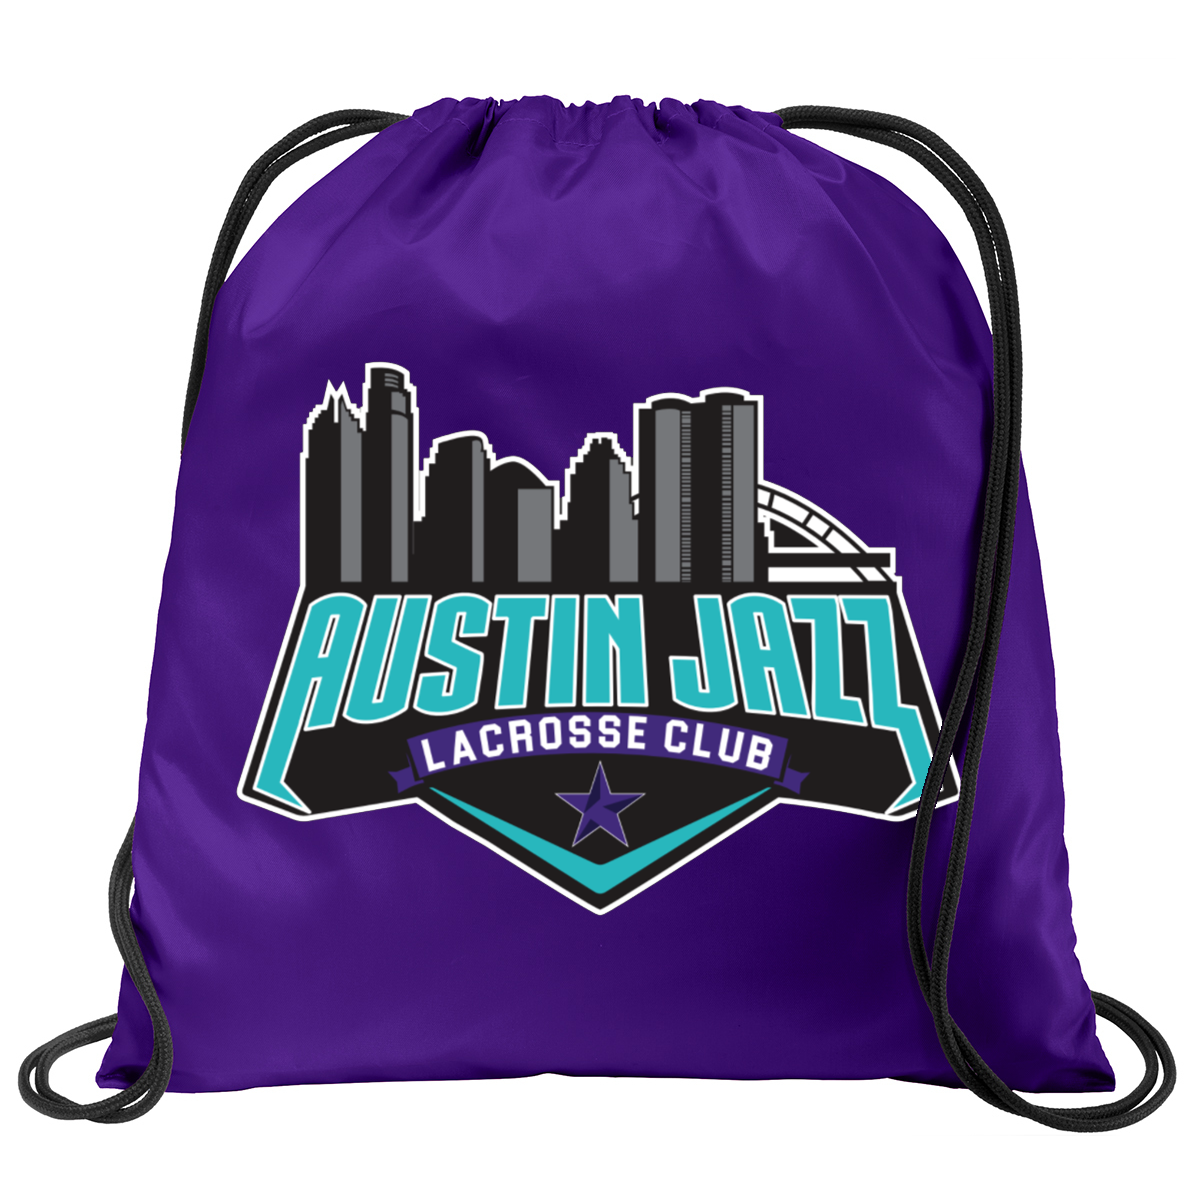 Austin Jazz Lacrosse Club Cinch Pack